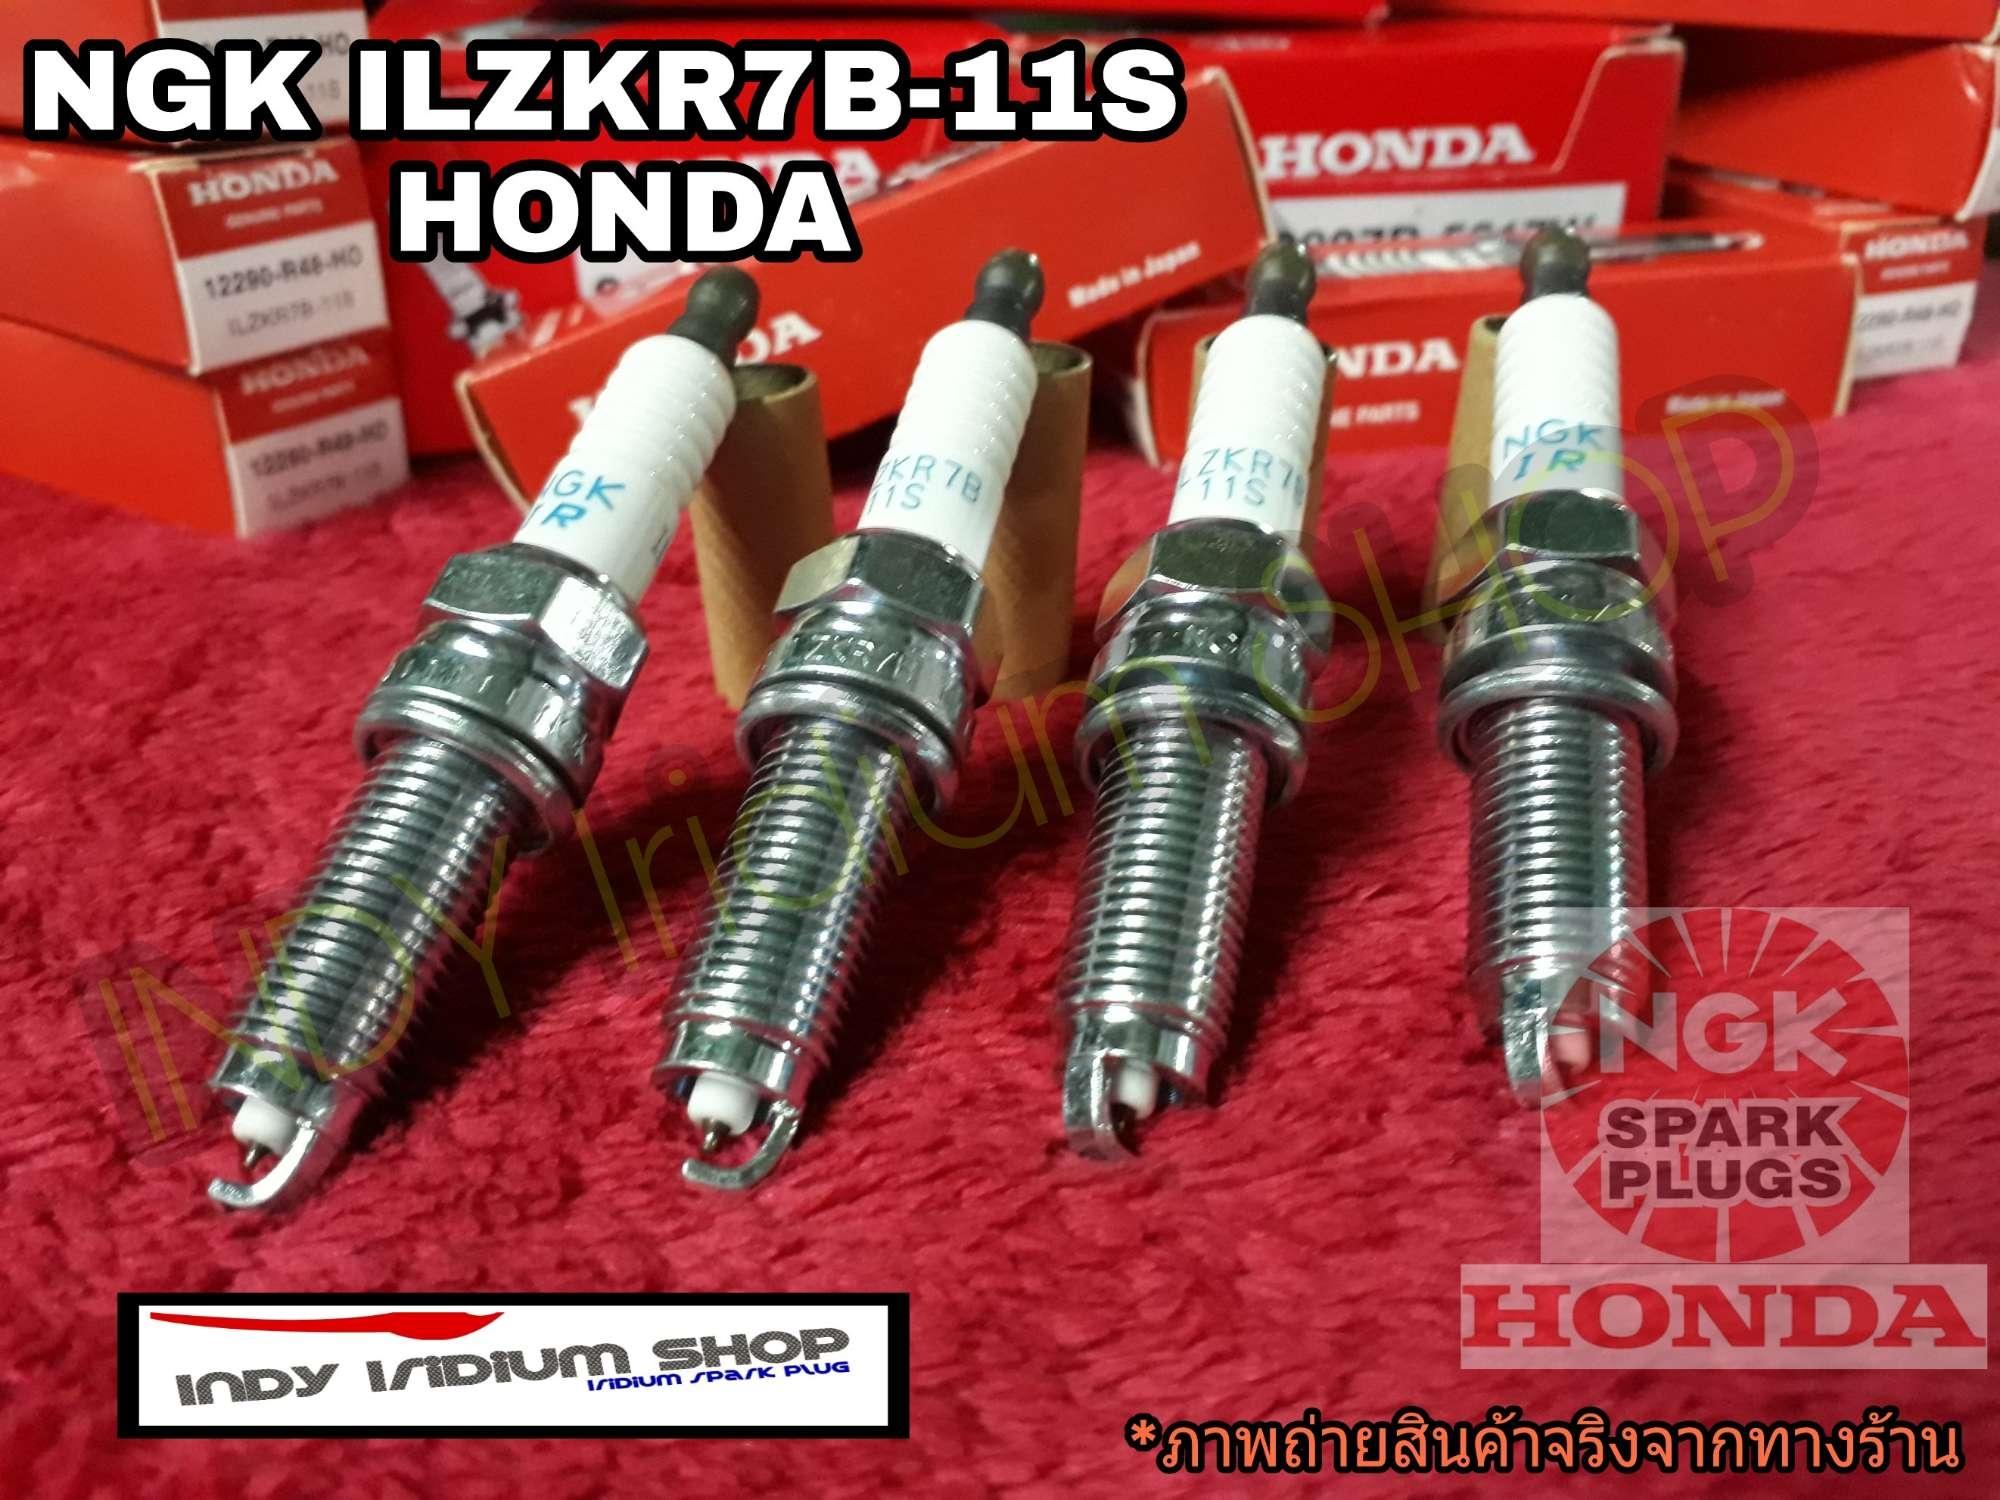 NGK ILZKR7B-11S HONDA HONDA Accord เครื่อง K24Z2 HONDA CR-V เครื่อง K24Z8 HONDA Civic เครื่อง K24Z7,K24Z5